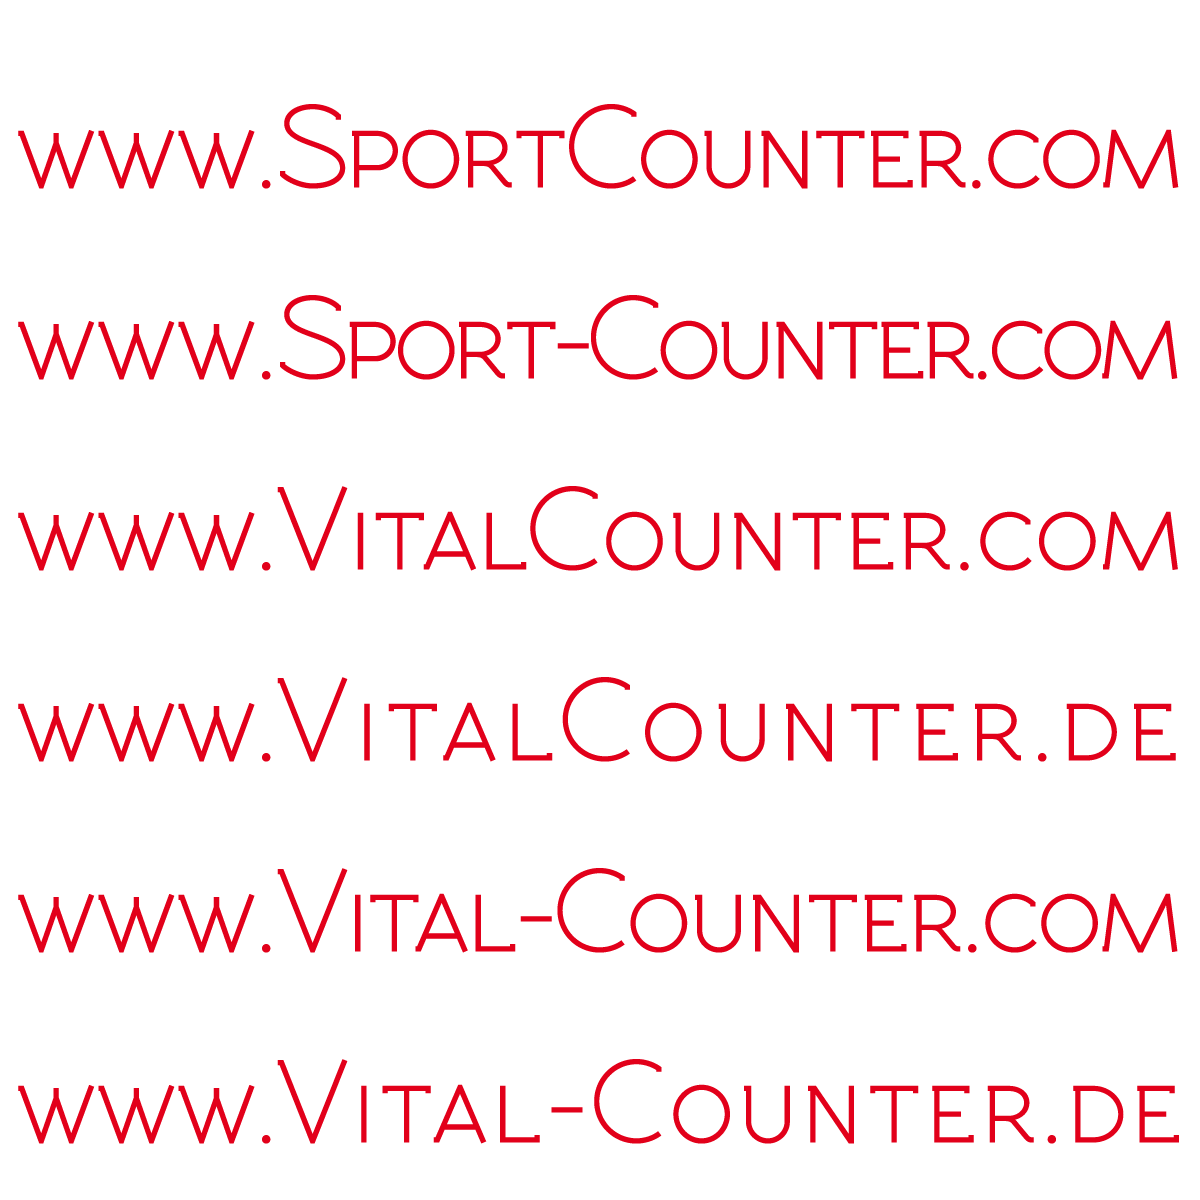 Domain-Verkäufe - Verkauf von attraktiven Domain-Namen - SportCounter.com VitalCounter.com